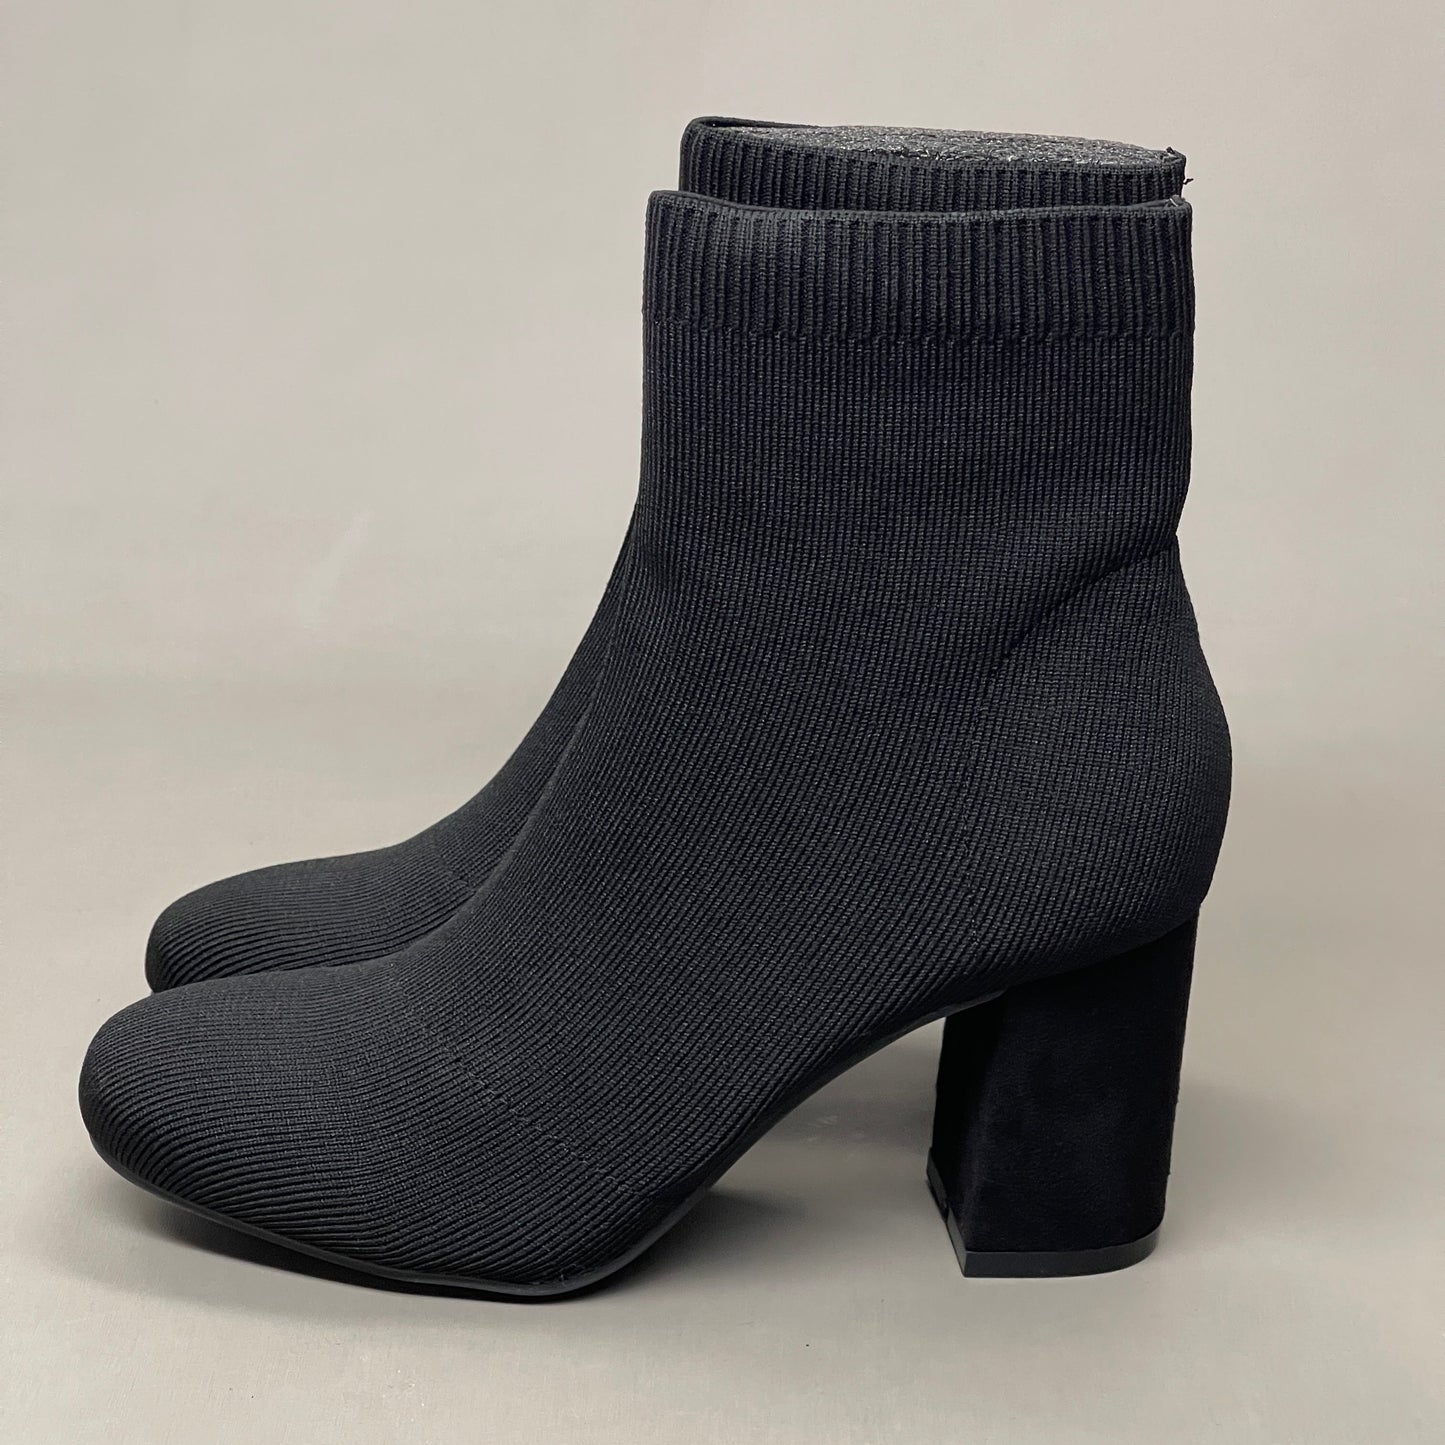 MIA Erika Fly Knit Booties Dress Boots Black 2” Heel Sz 8.5 GS7553115Y (New)